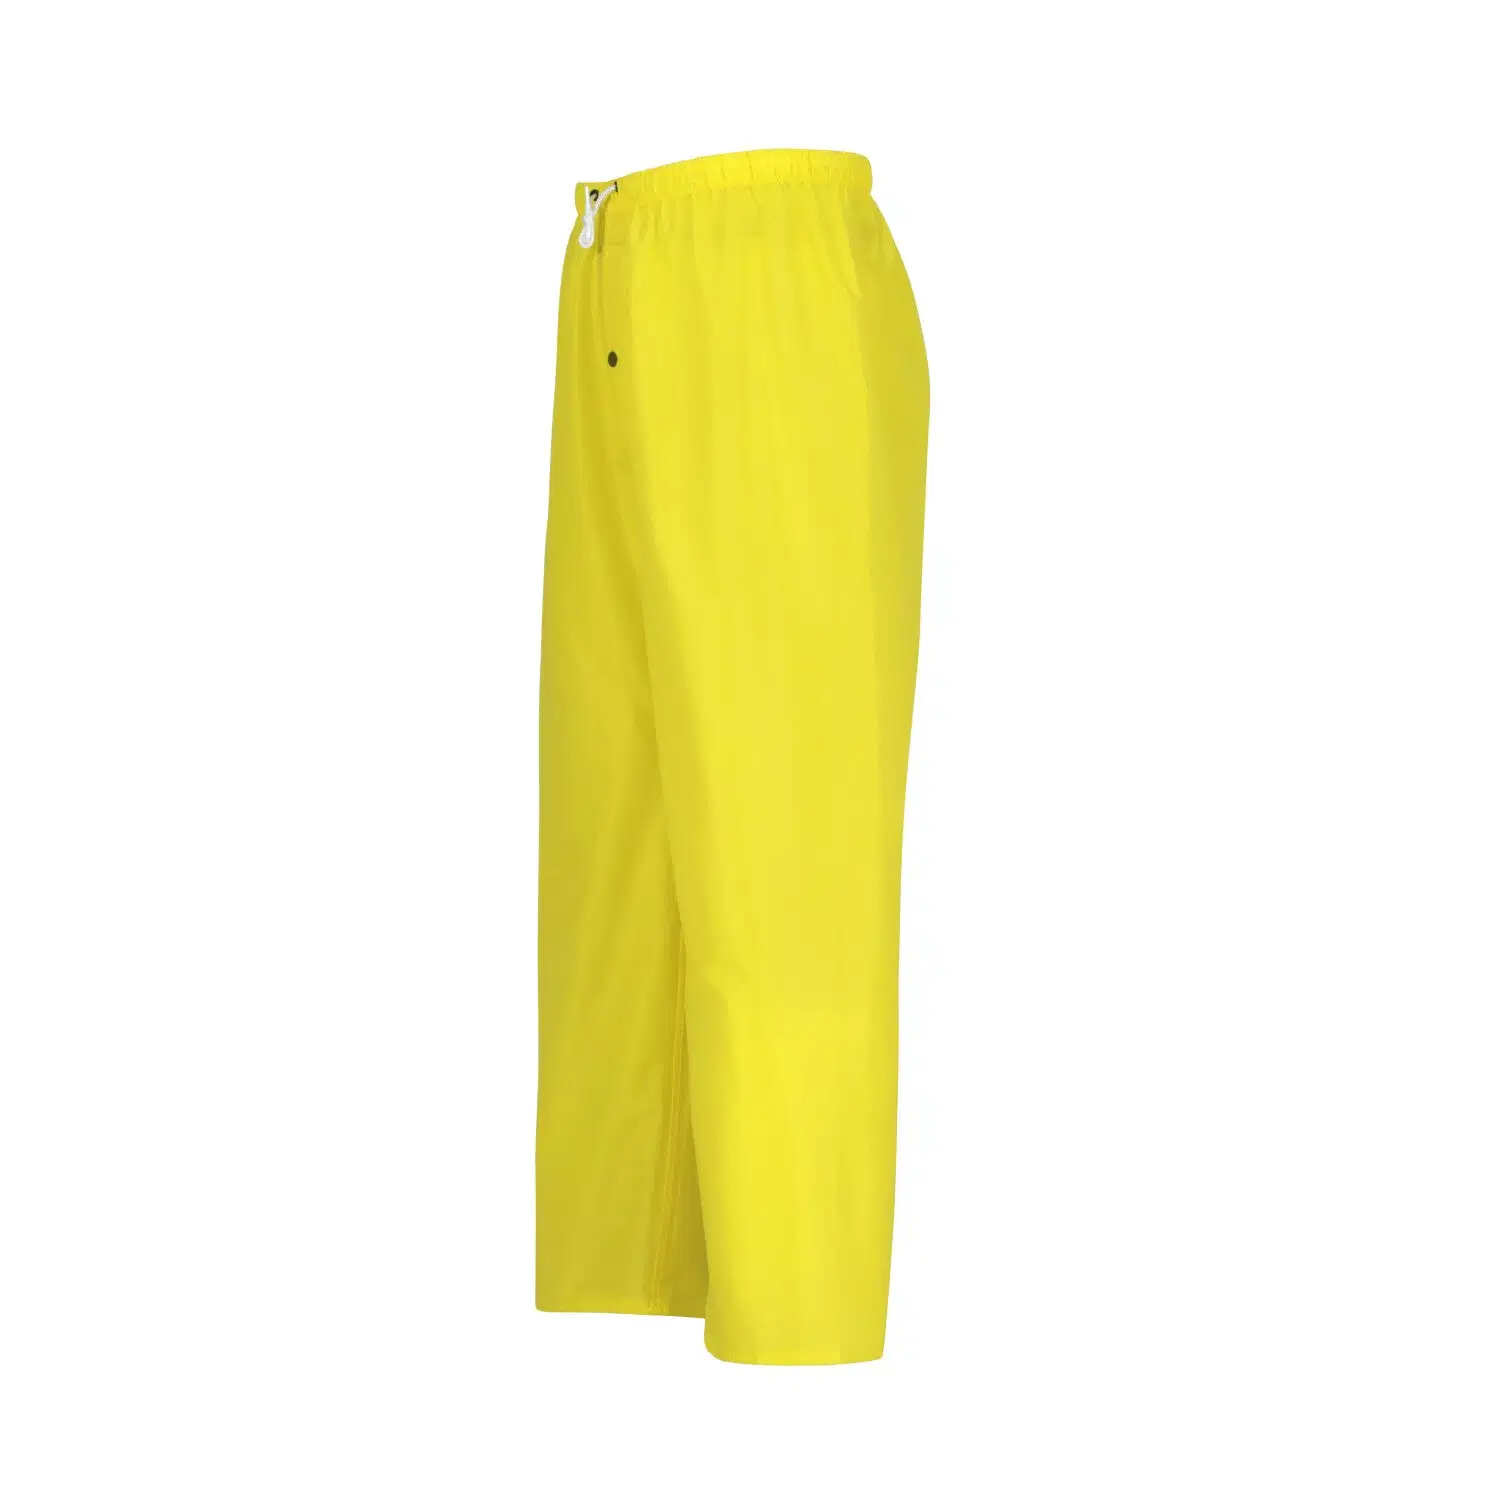 Pantalones impermeables amarillos para exteriores pantalones de lluvia para adultos pantalones de seguridad